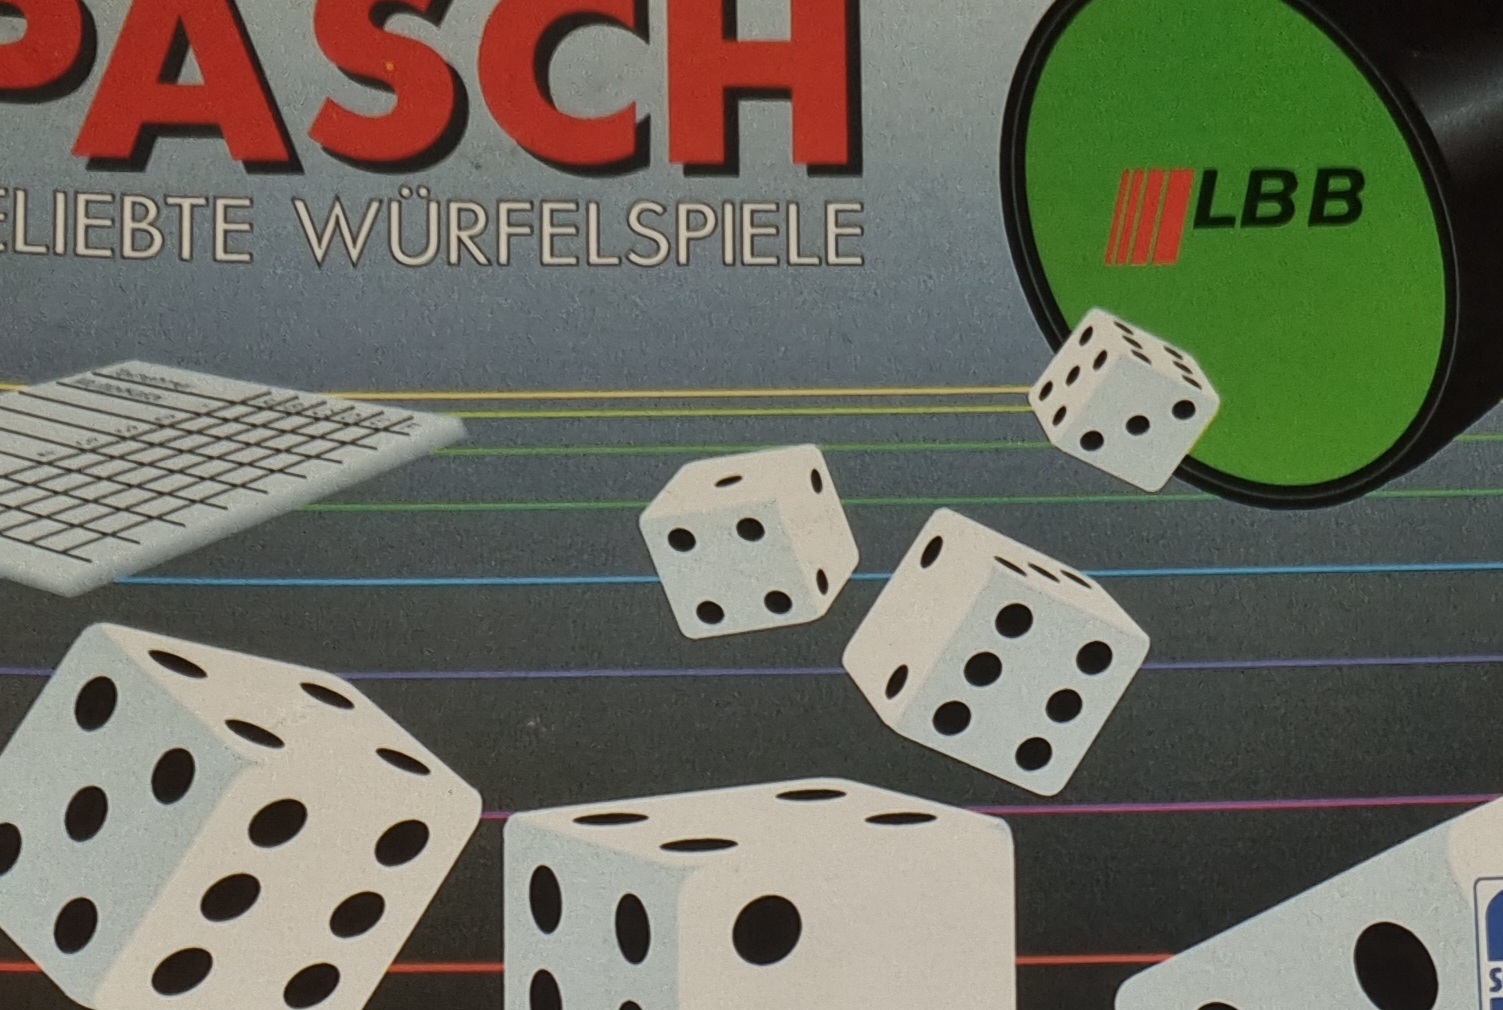 FX Schmid Pasch Beliebte Würfelspiele 727003